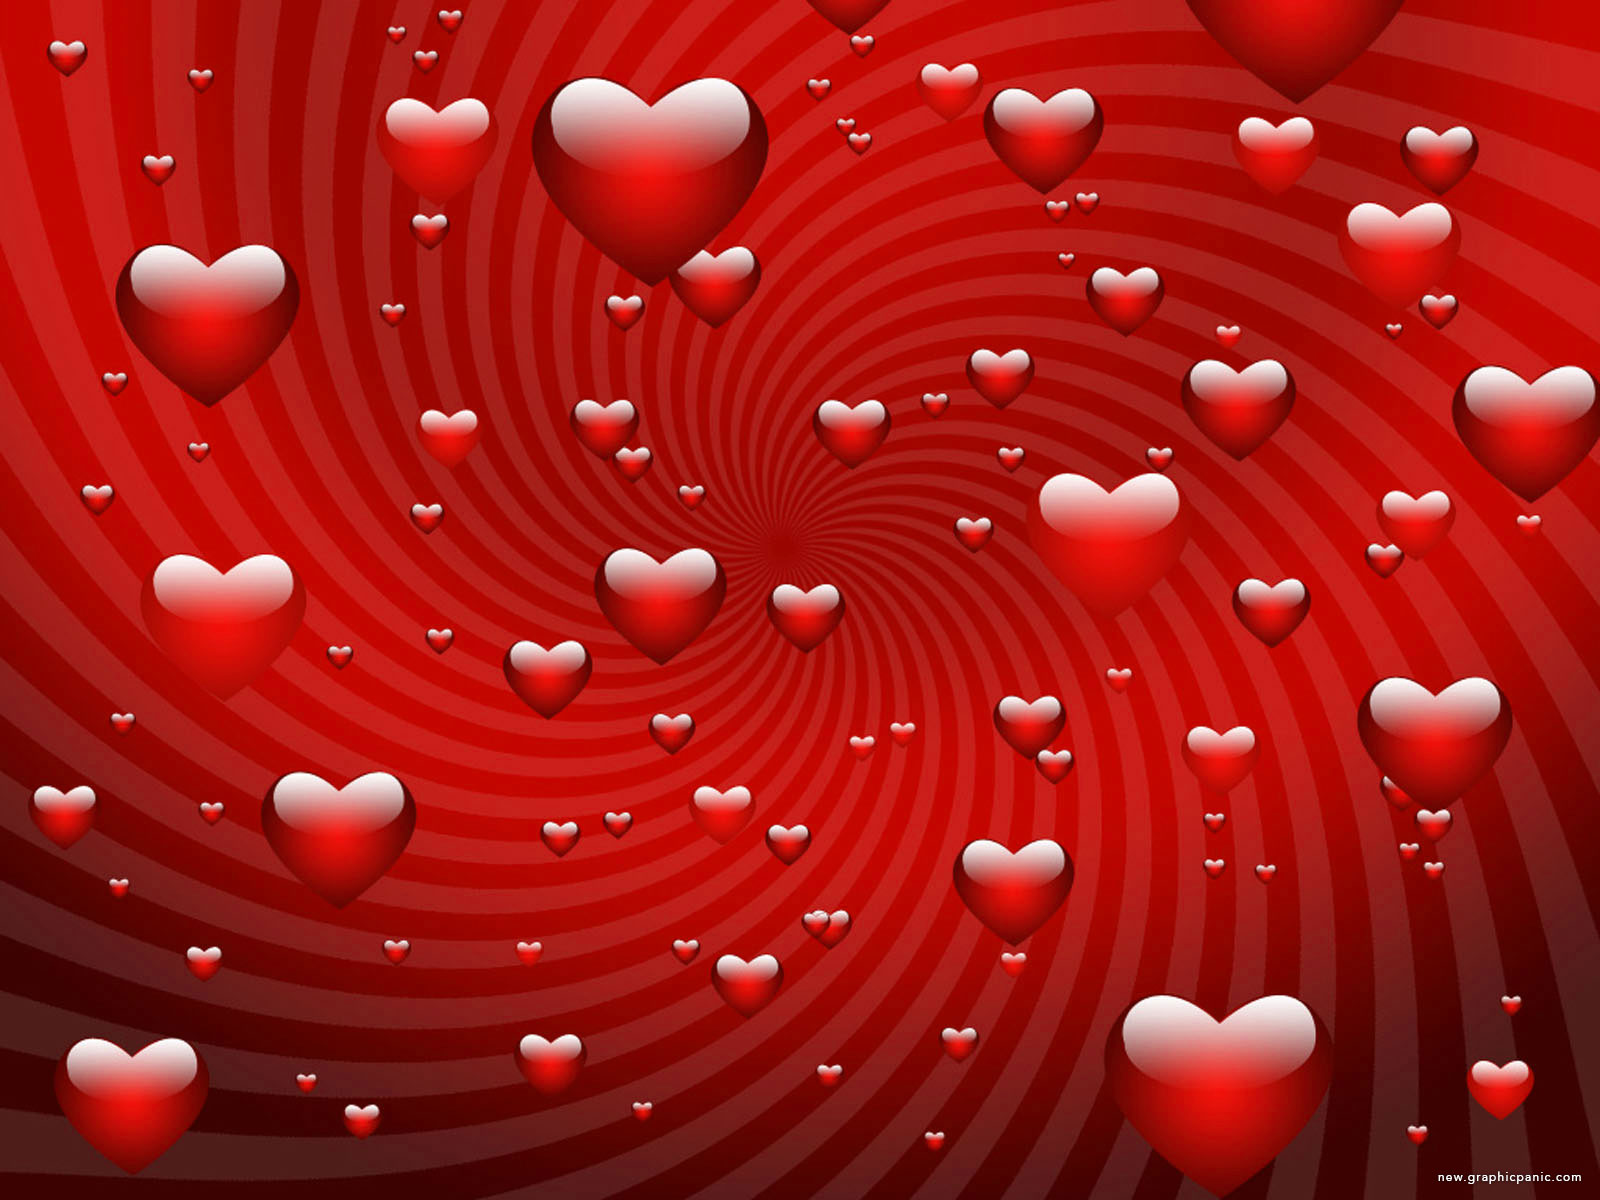 Valentine Red Heart Background New Graphicpanic